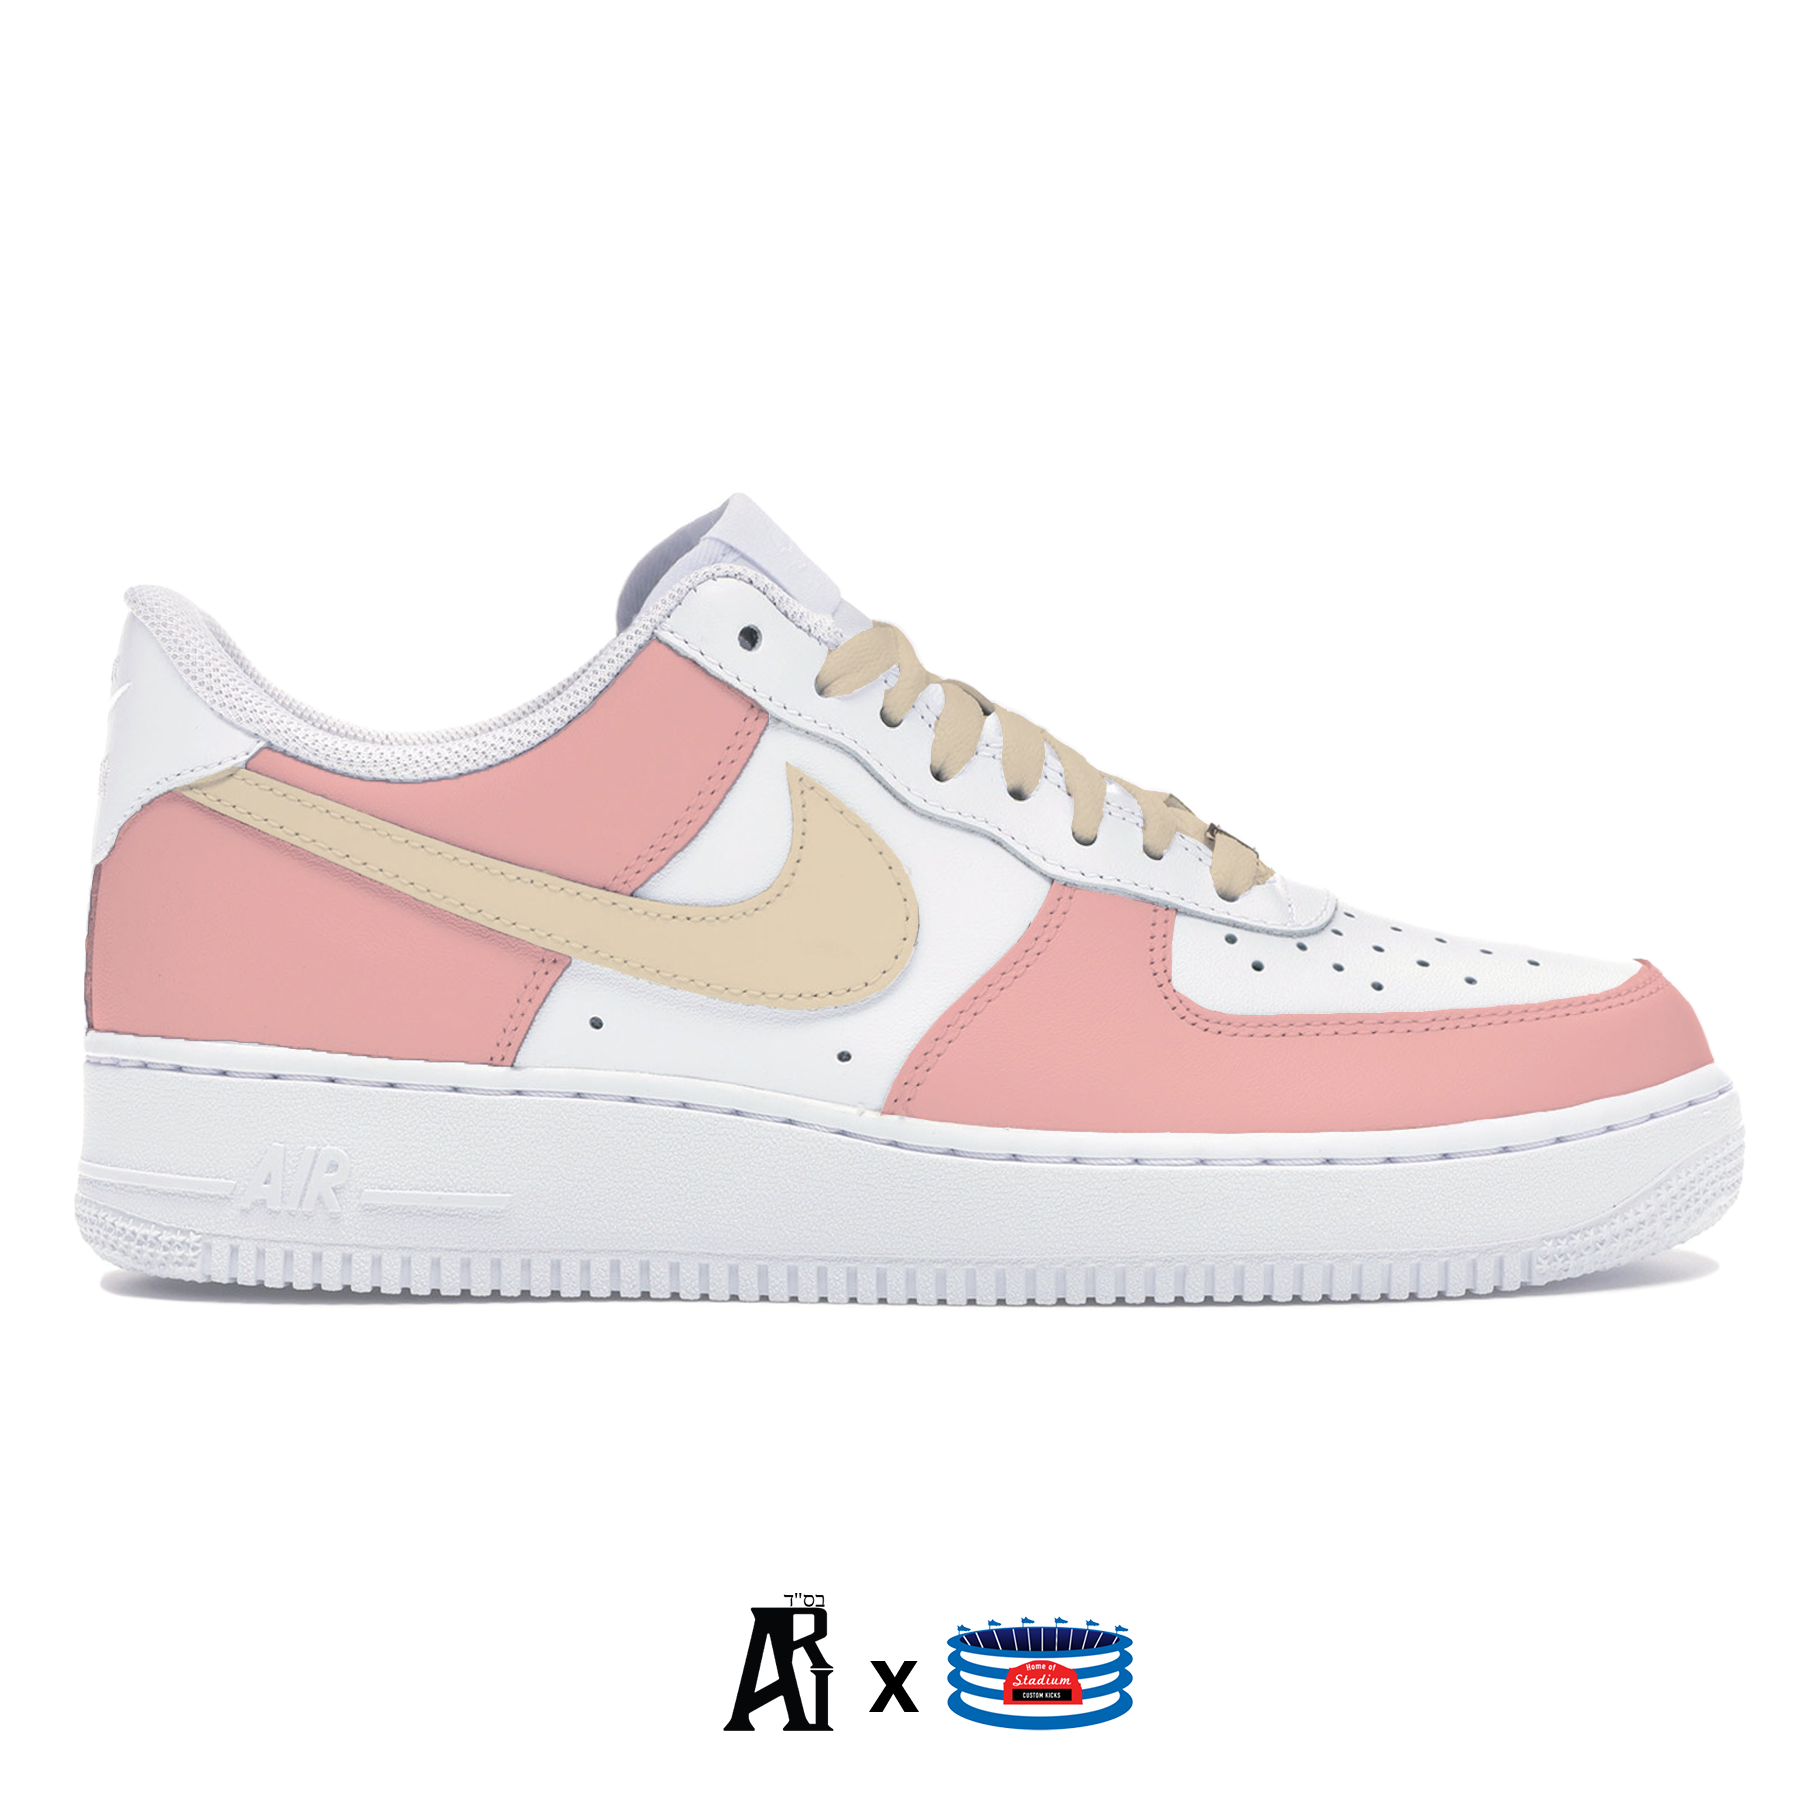 Nike Air Force 1 with custom pink art